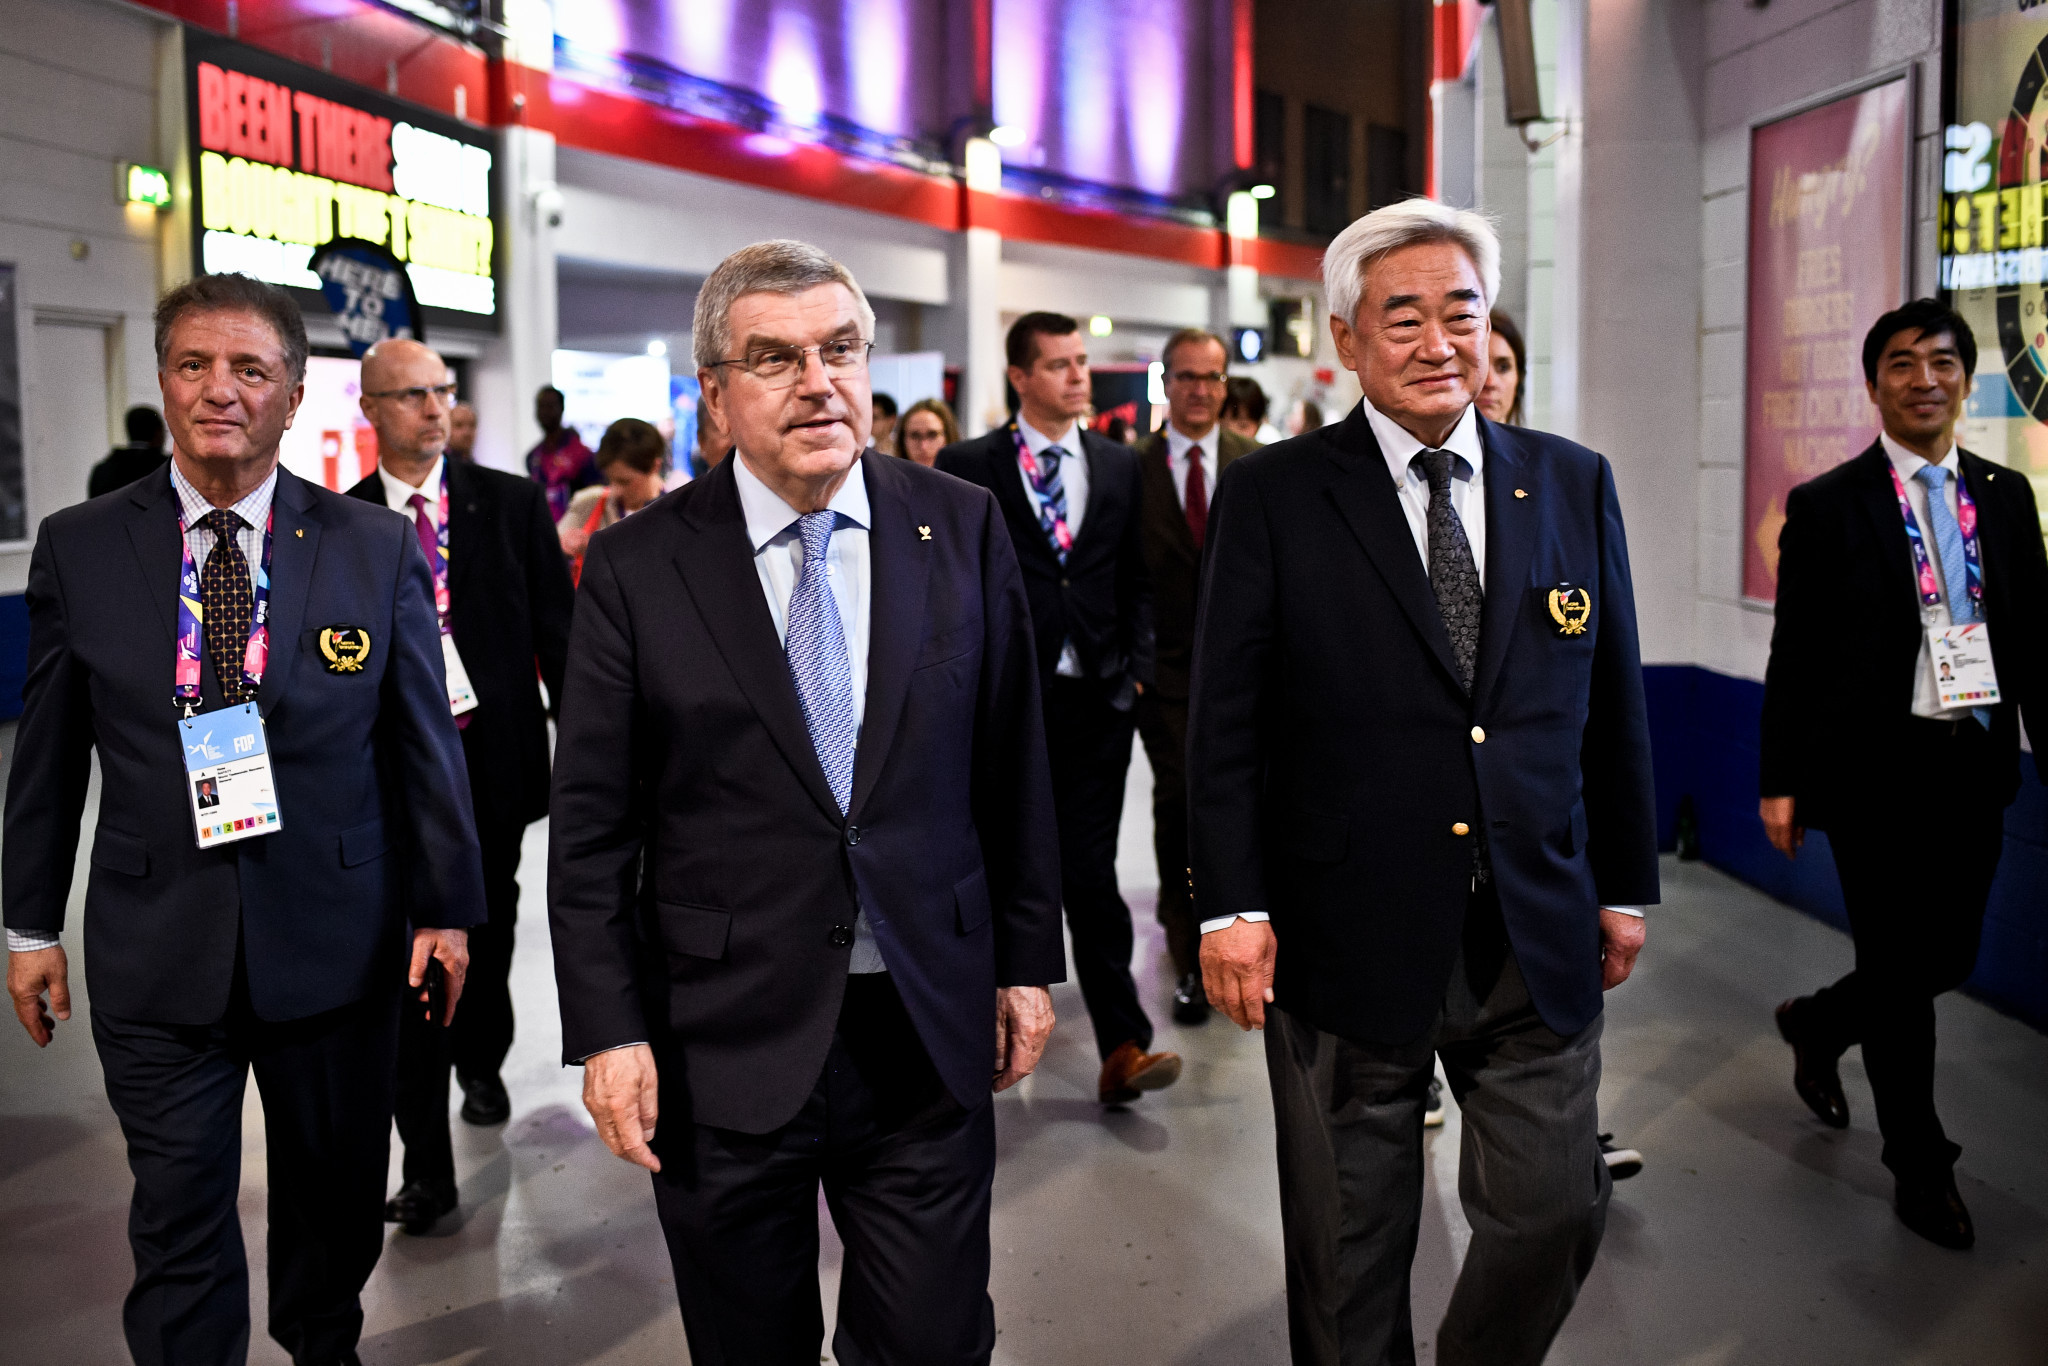 IOC President Thomas Bach visited Manchester Arena for the 2019 World Taekwondo Championships ©World Taekwondo